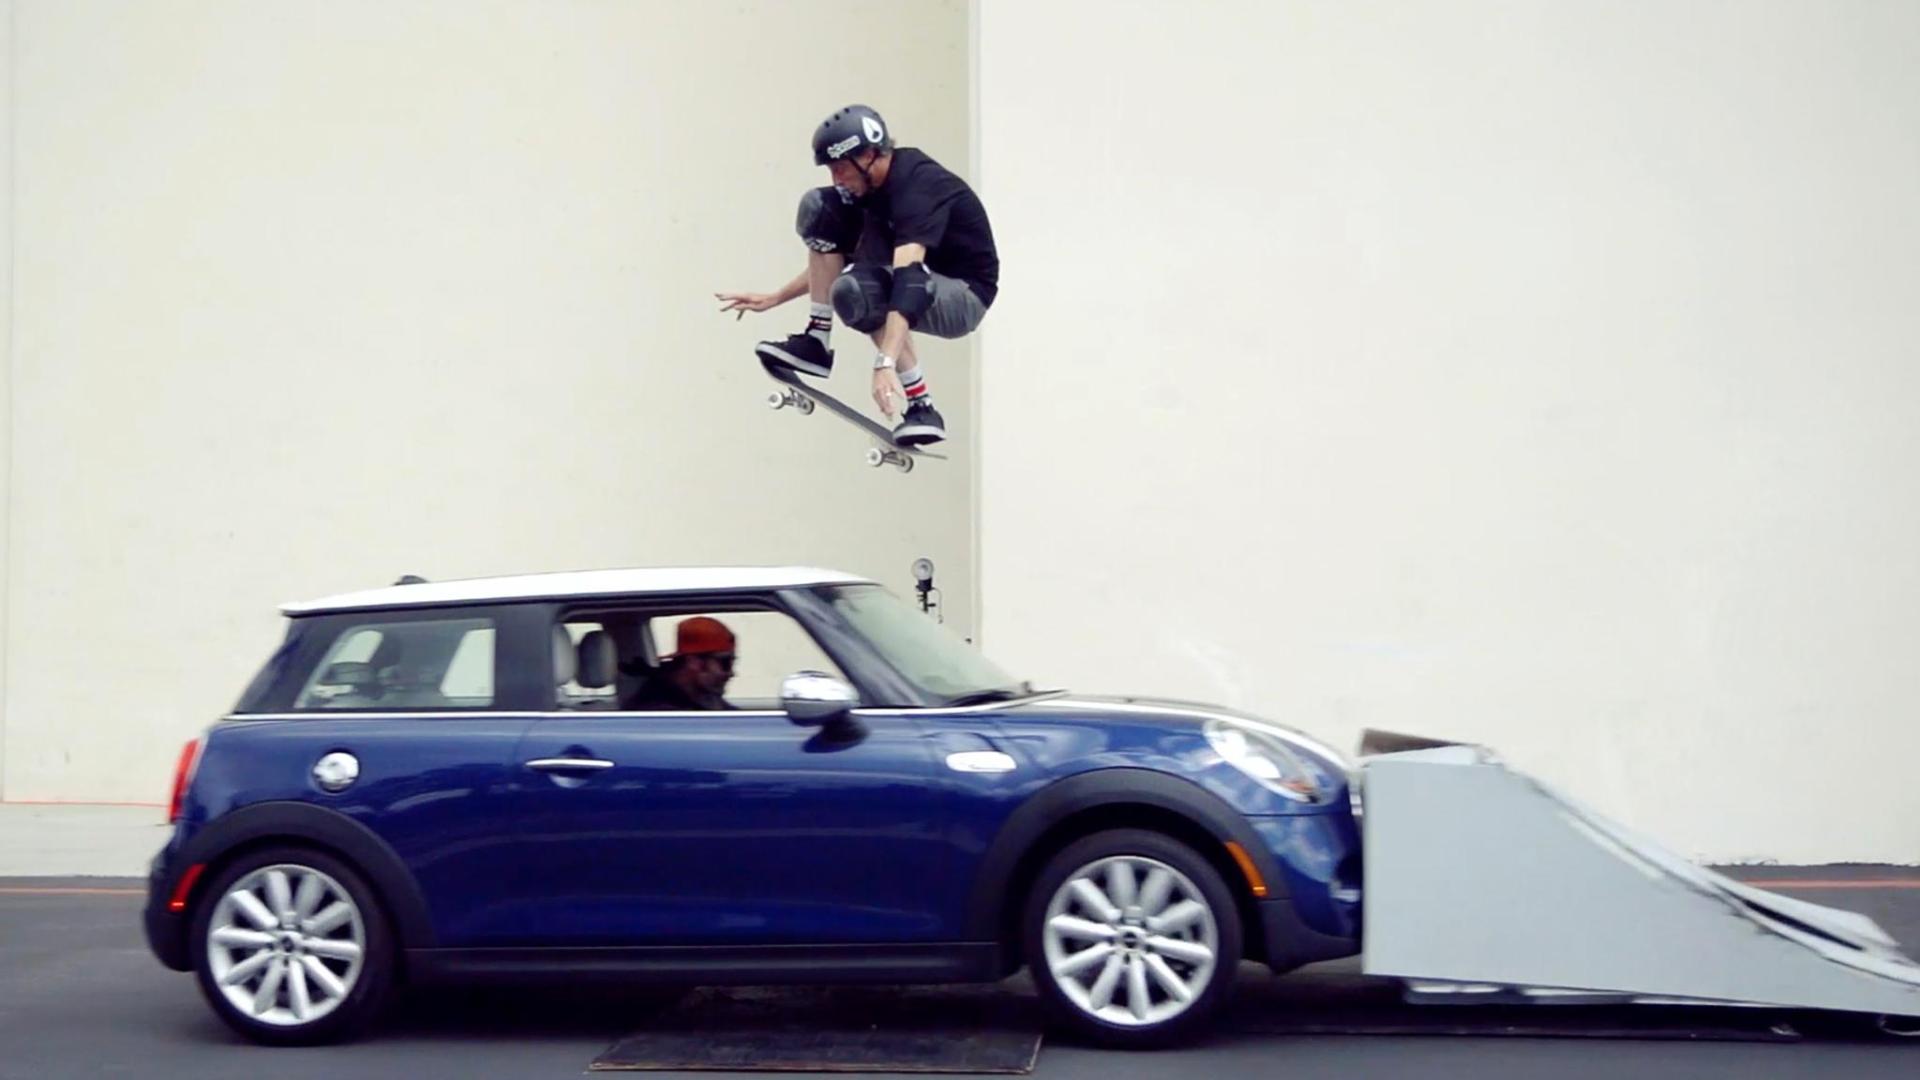 Skaters In Cars Looking At Spots: Tony Hawk Part 2 - ESPN Video